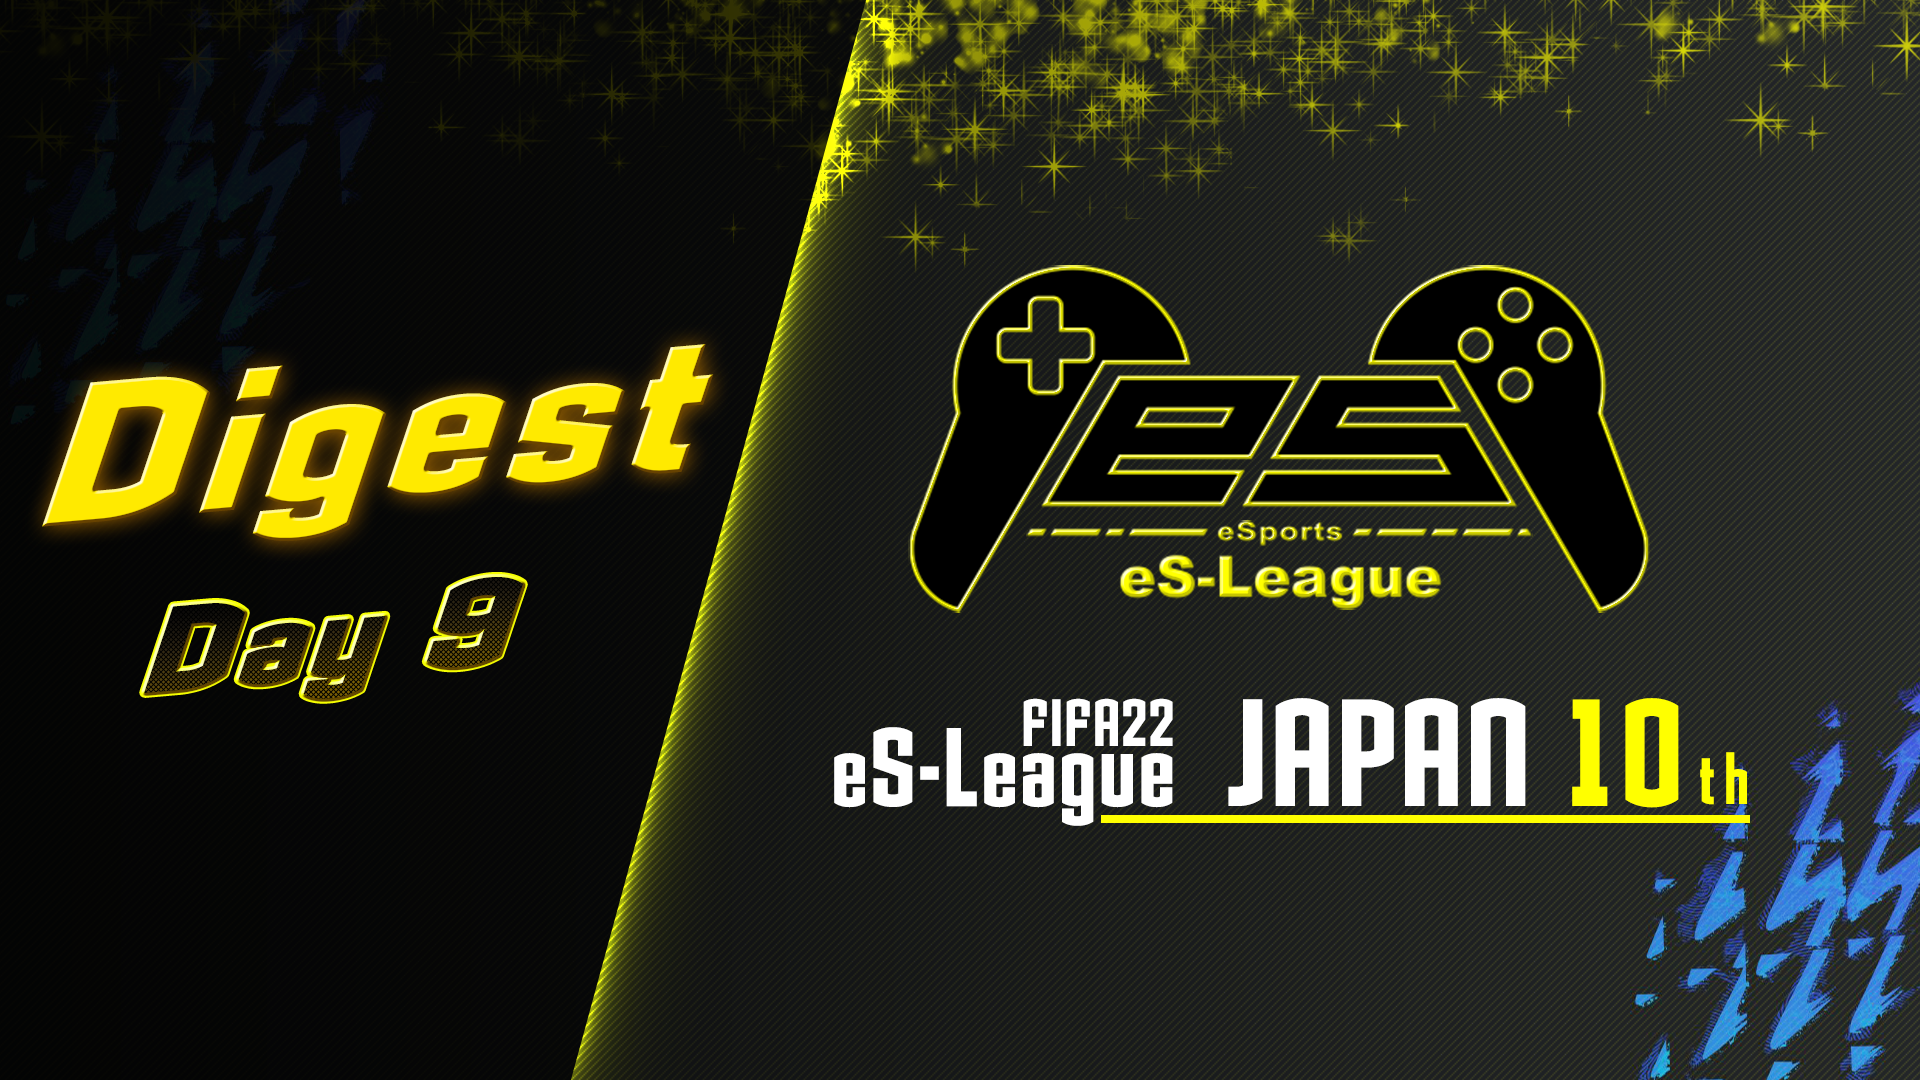 FIFA22 eS League JAPAN 10th DAY9 ダイジェスト